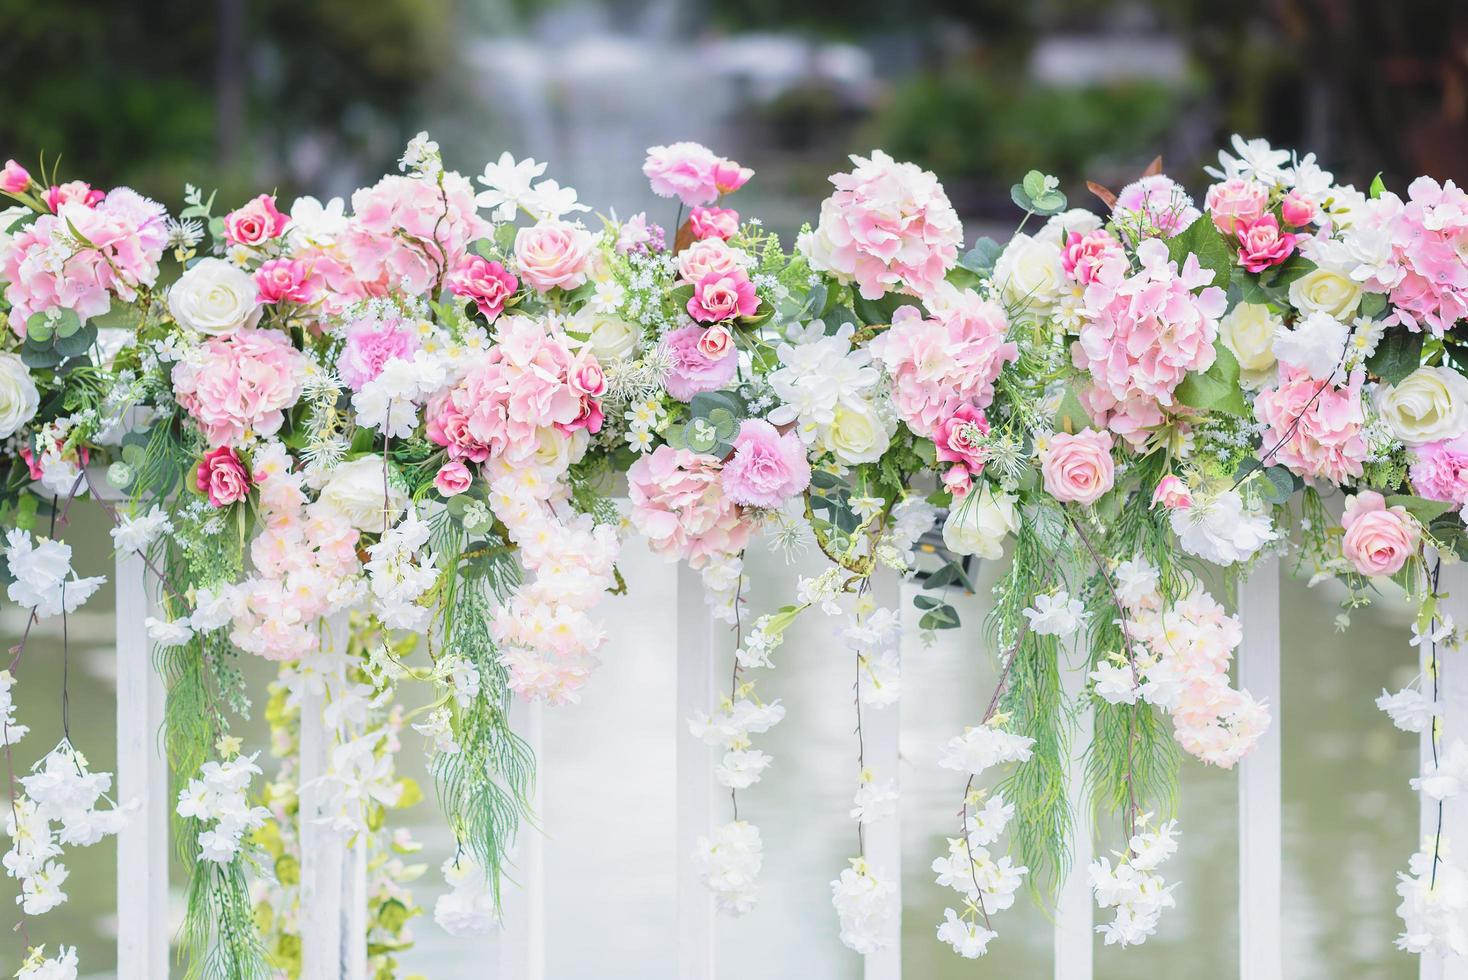 Bunch of flowers background, Wedding decoration photo